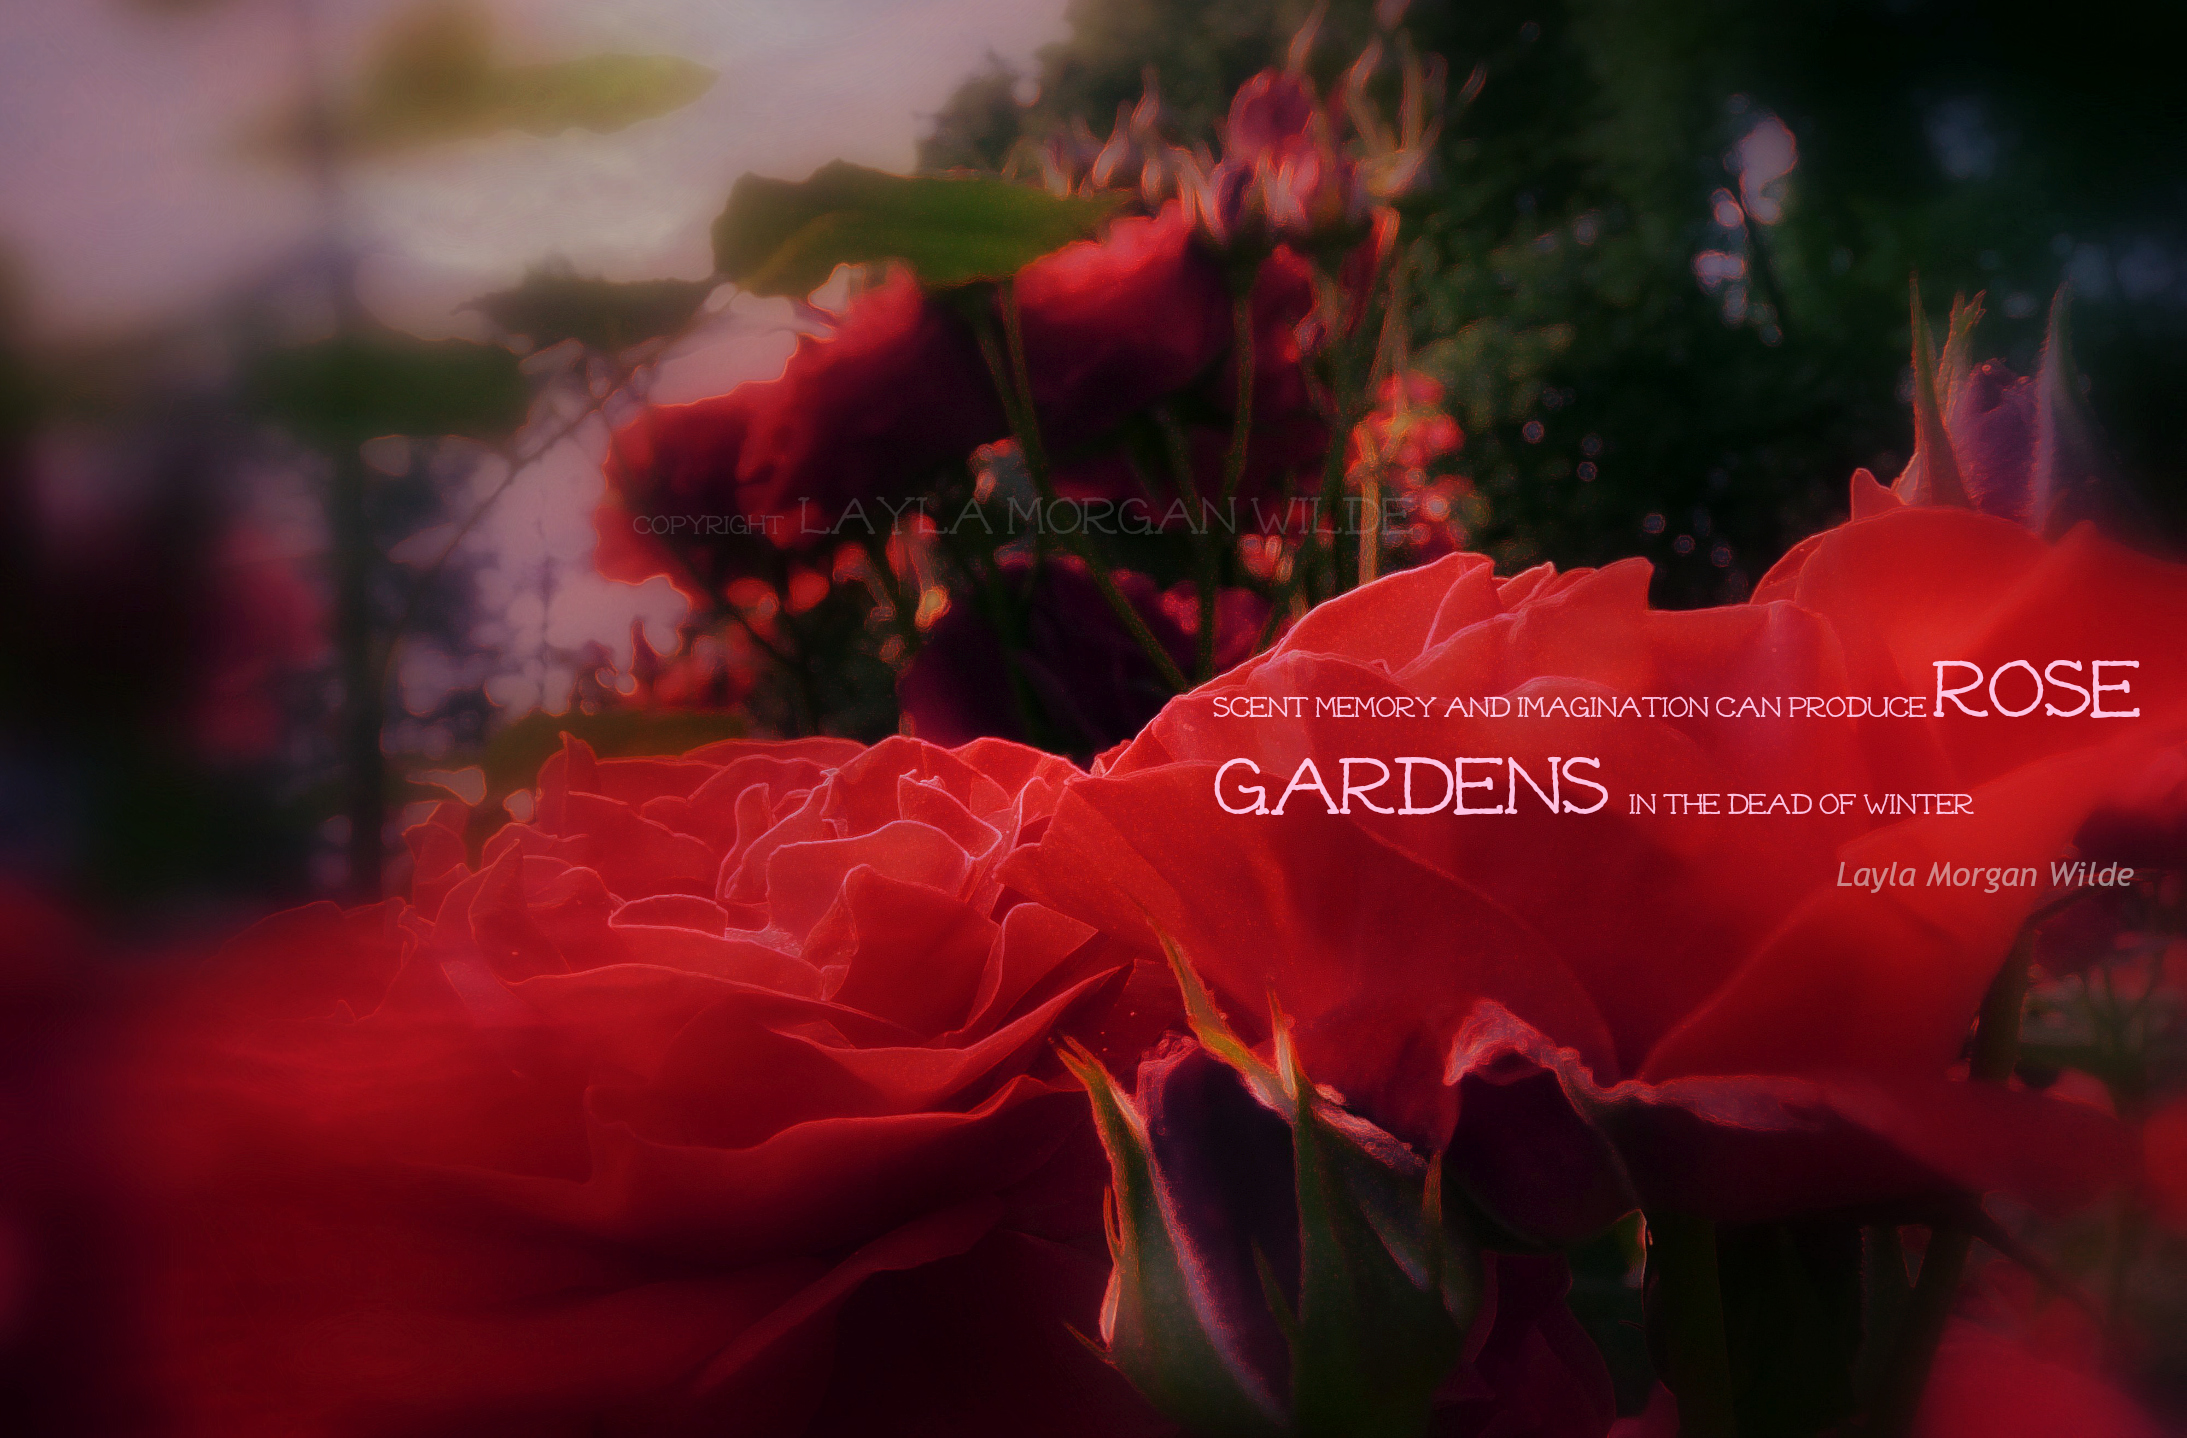 rose-garden-winter-quote